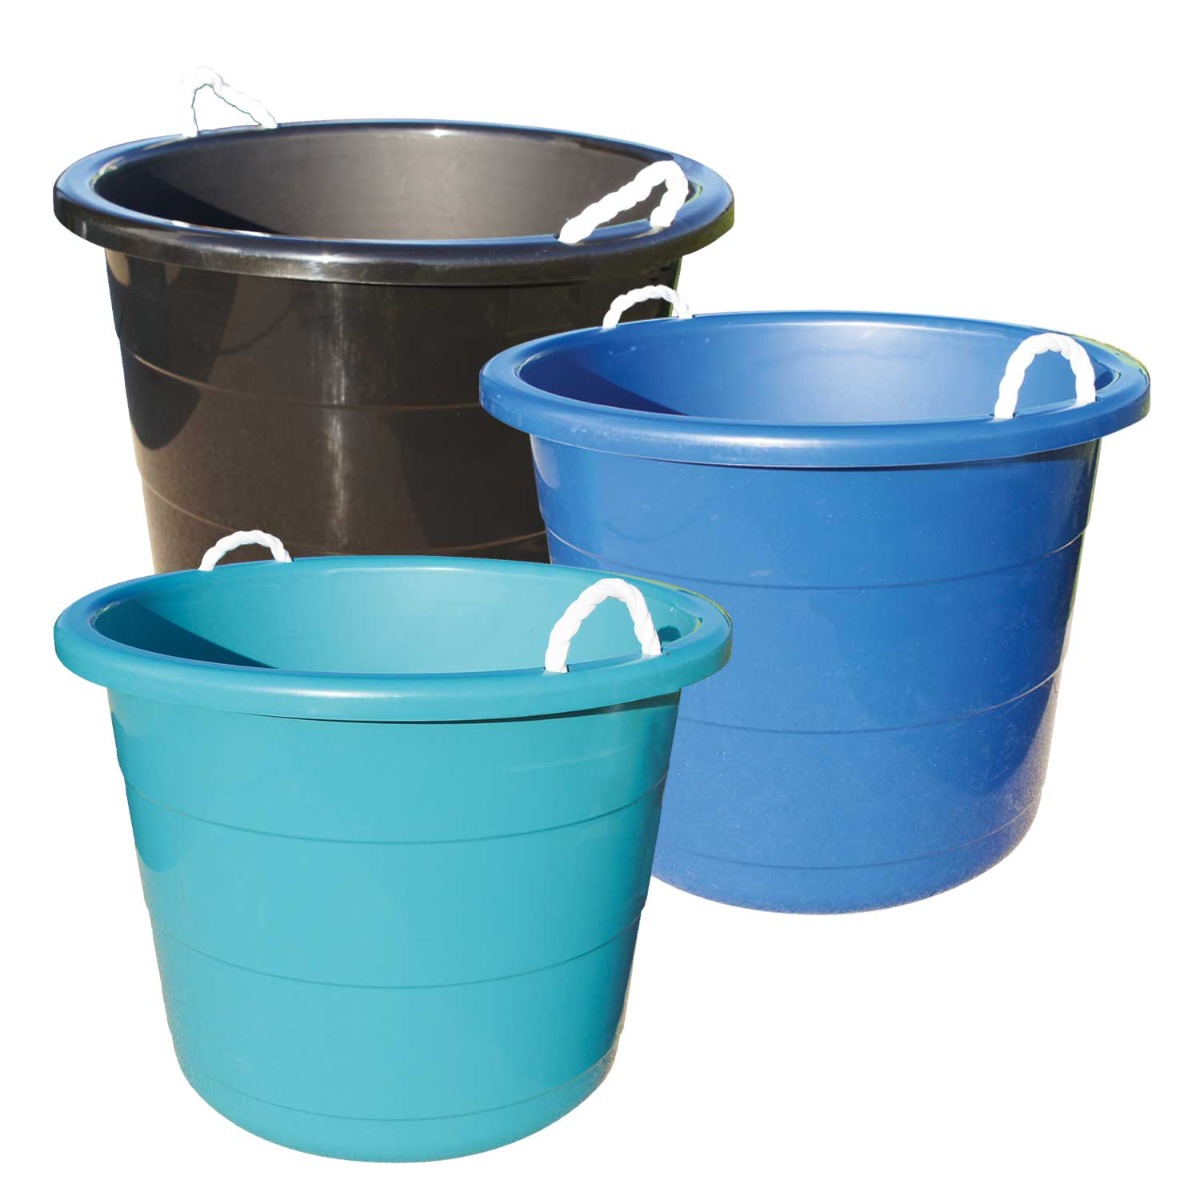 https://www.tpesonline.com/media/catalog/product/o/s/os-bucset-set-of-3-17g-buckets.jpg